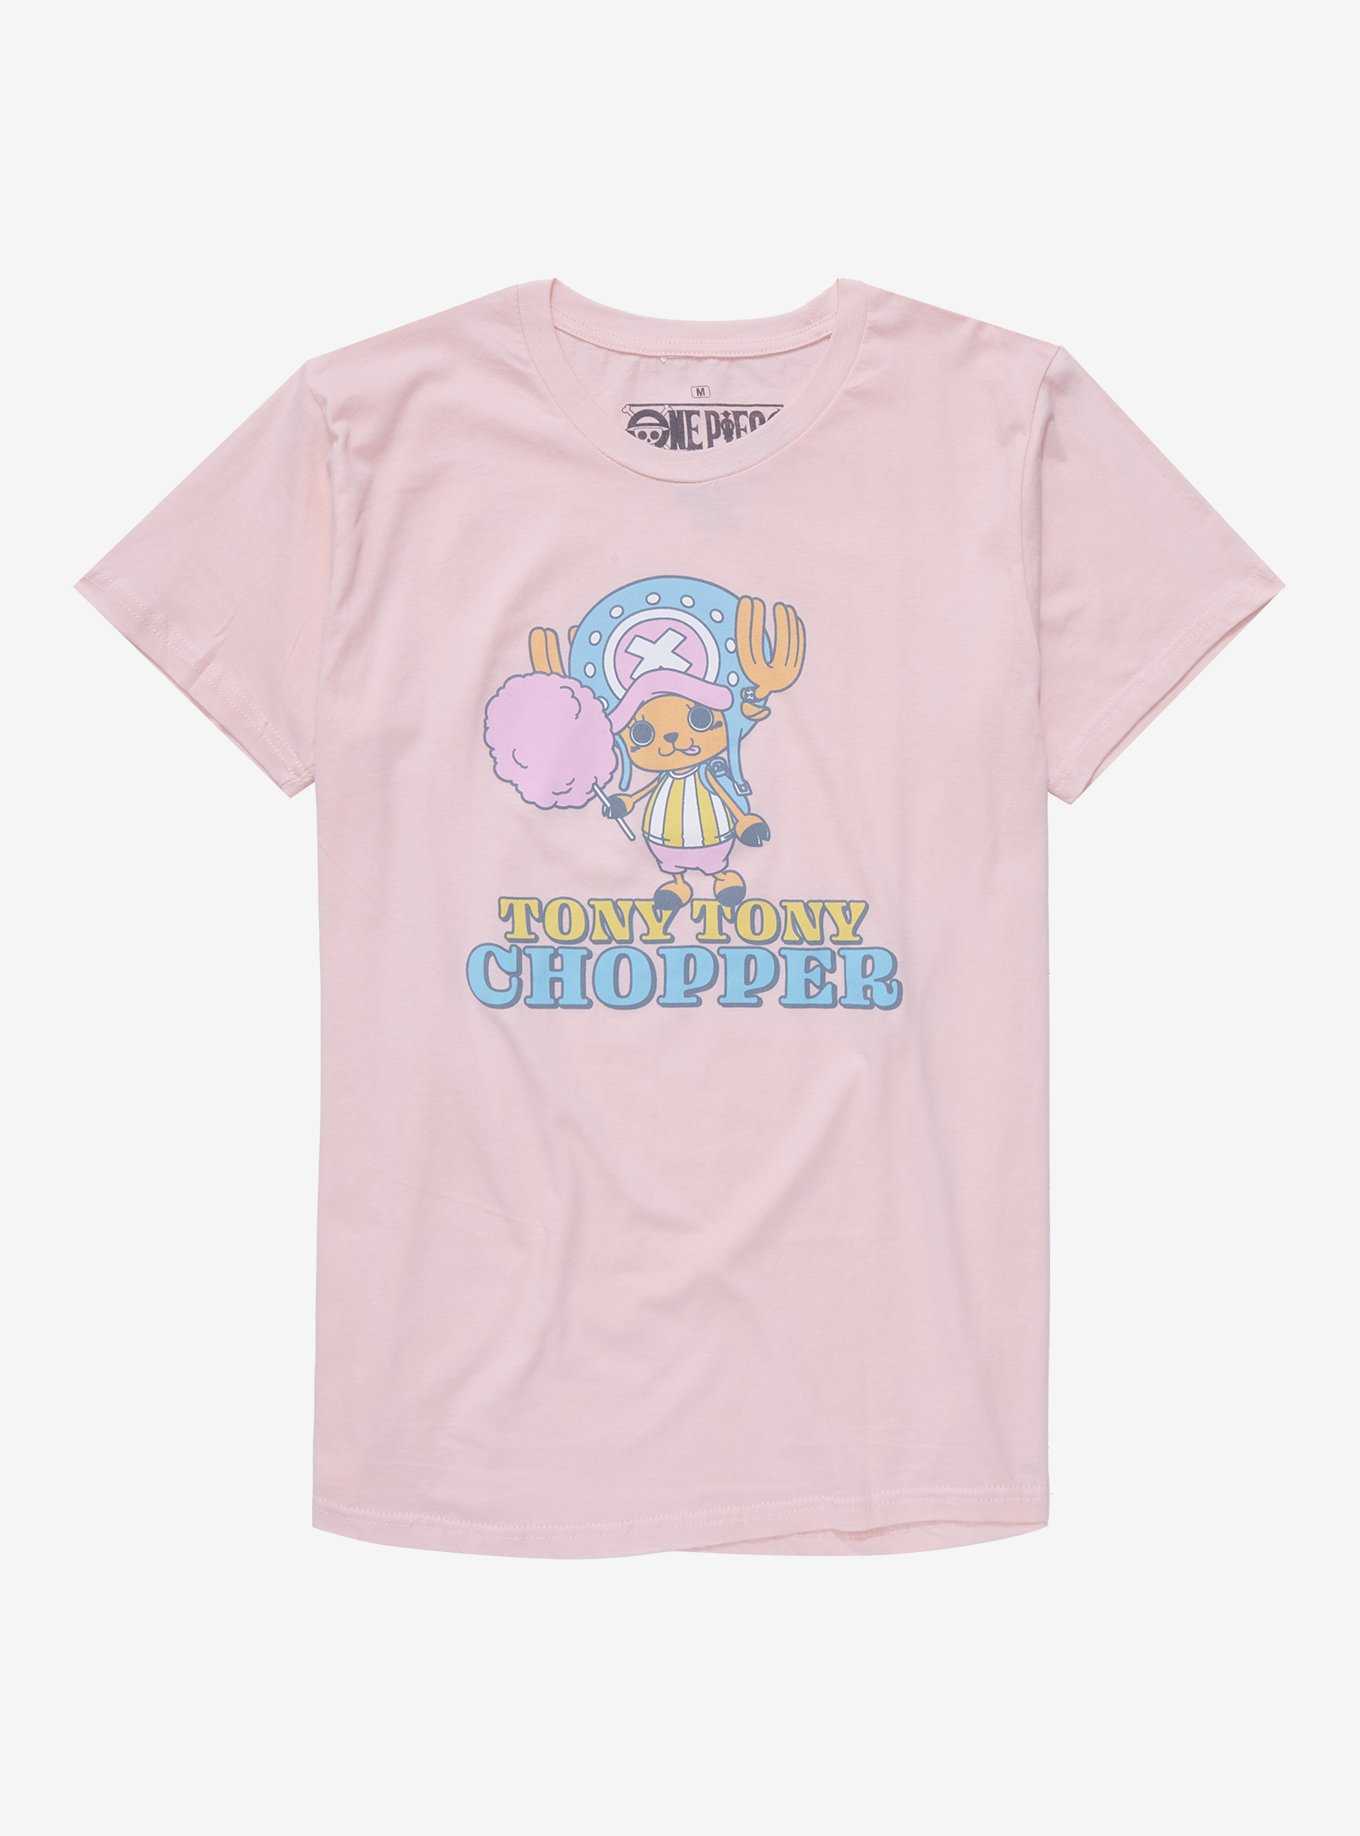 One Piece Chopper Cotton Candy Boyfriend Fit Girls T-Shirt, , hi-res